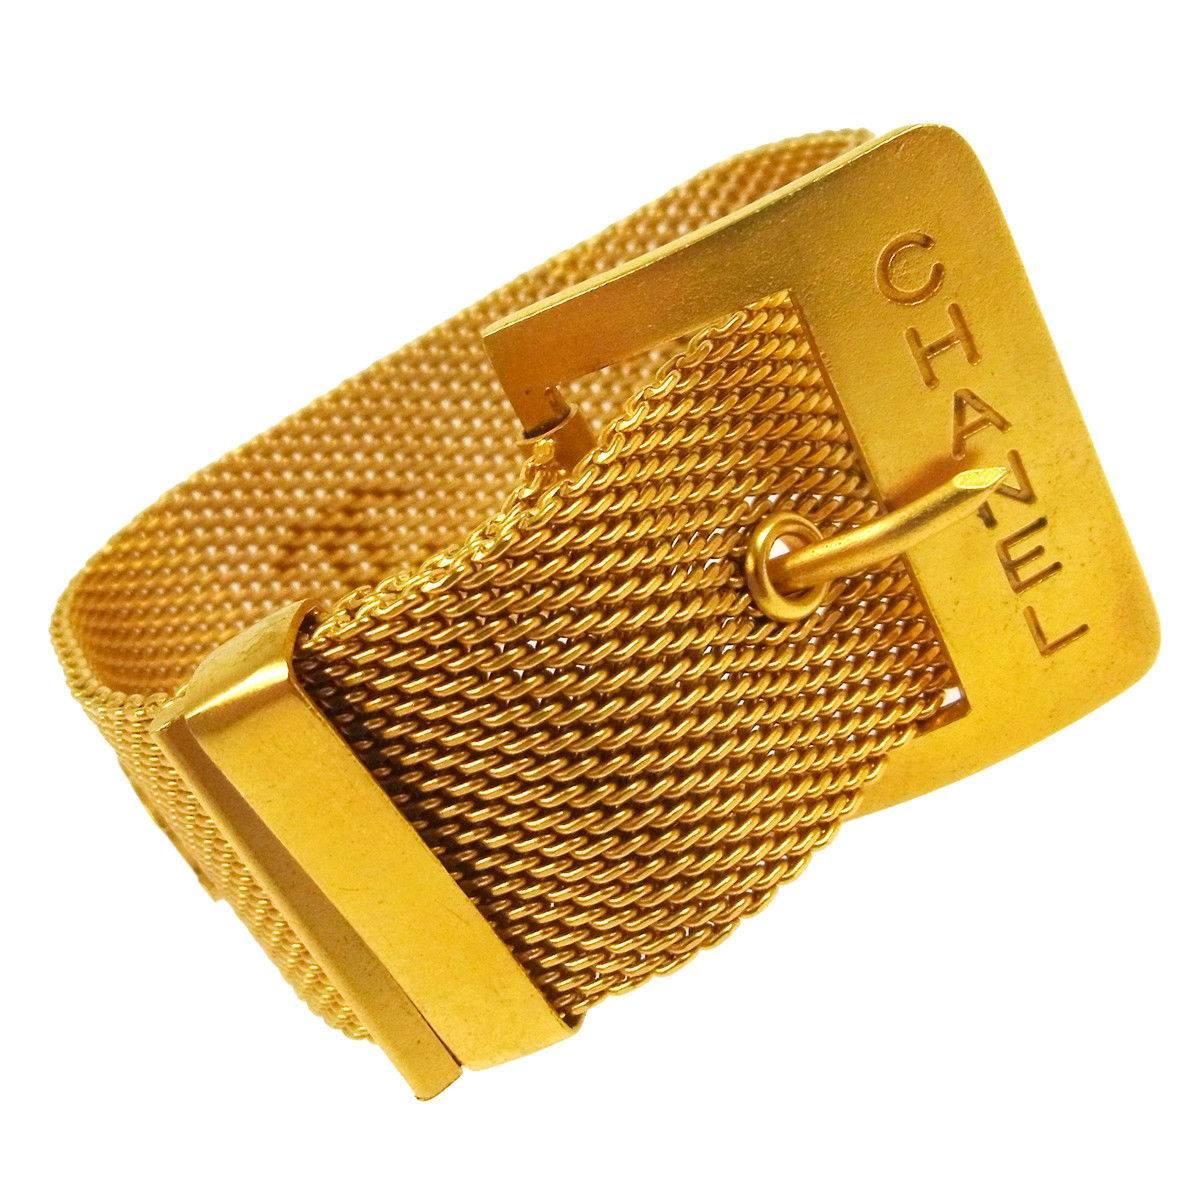 Chanel Gold Charm Belt Buckle Mesh Evening Cuff Bracelet 